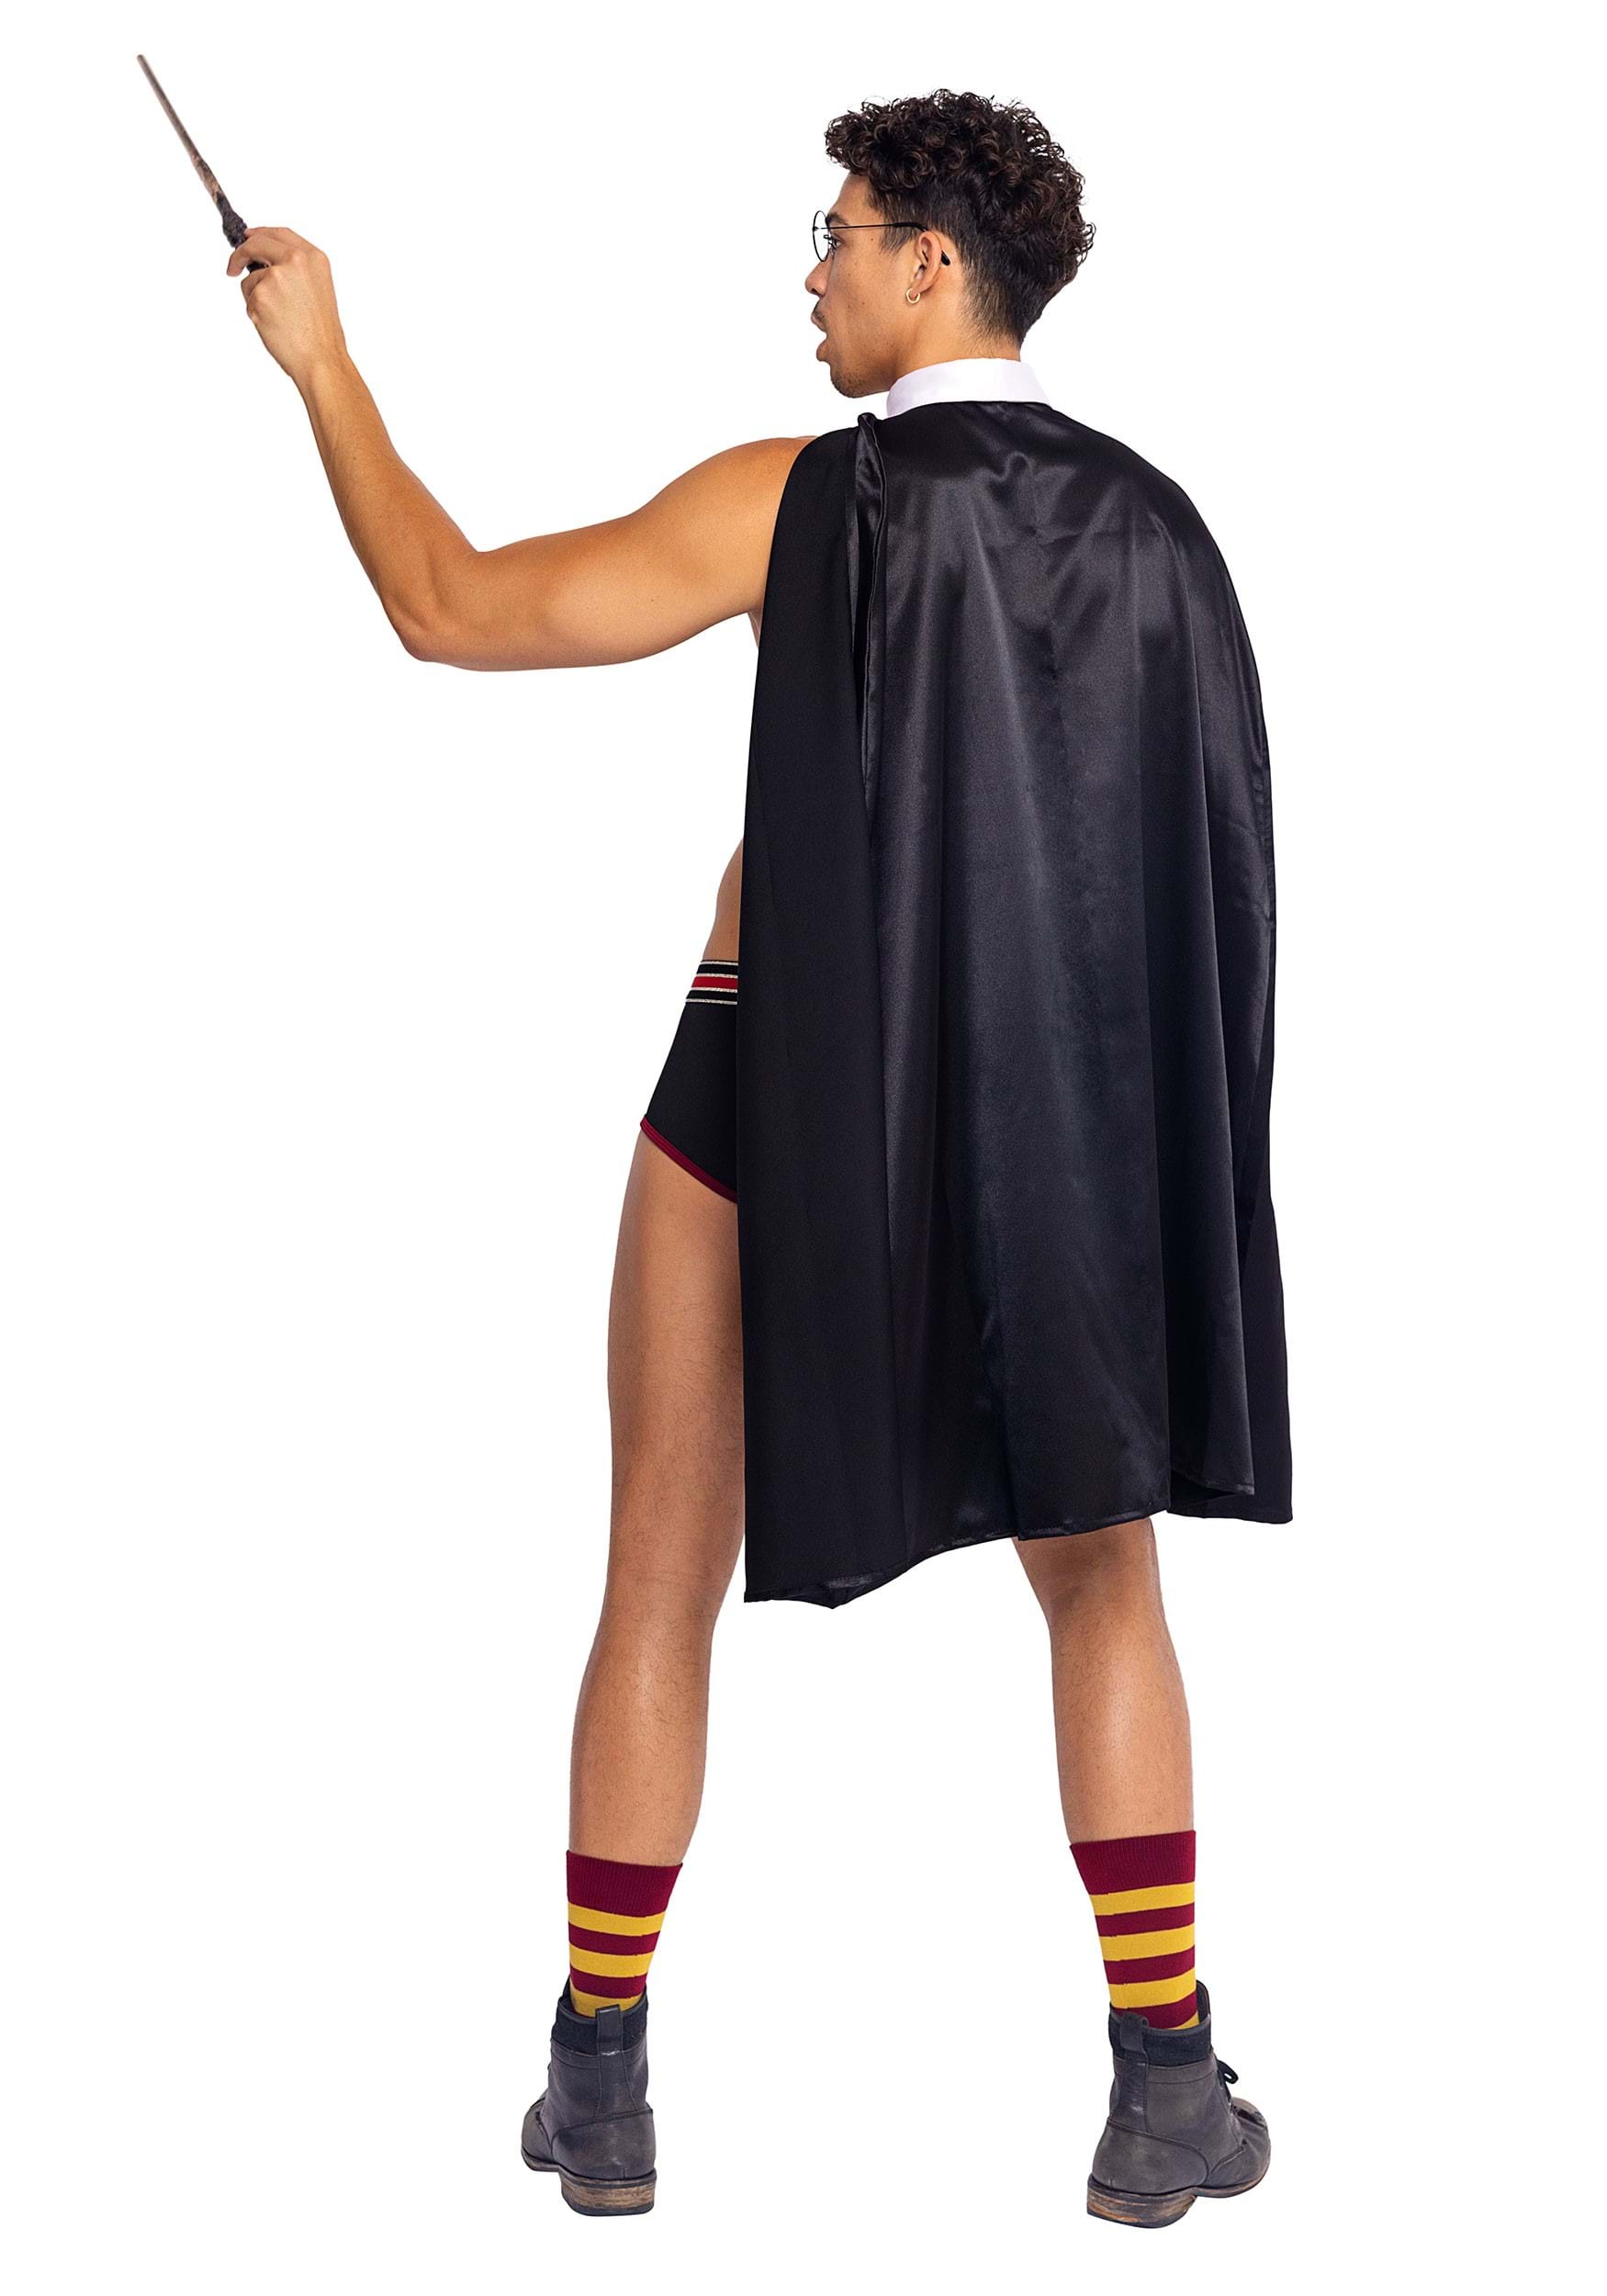 Hunky Wizard Men's Costume , Sexy Men's Costumes